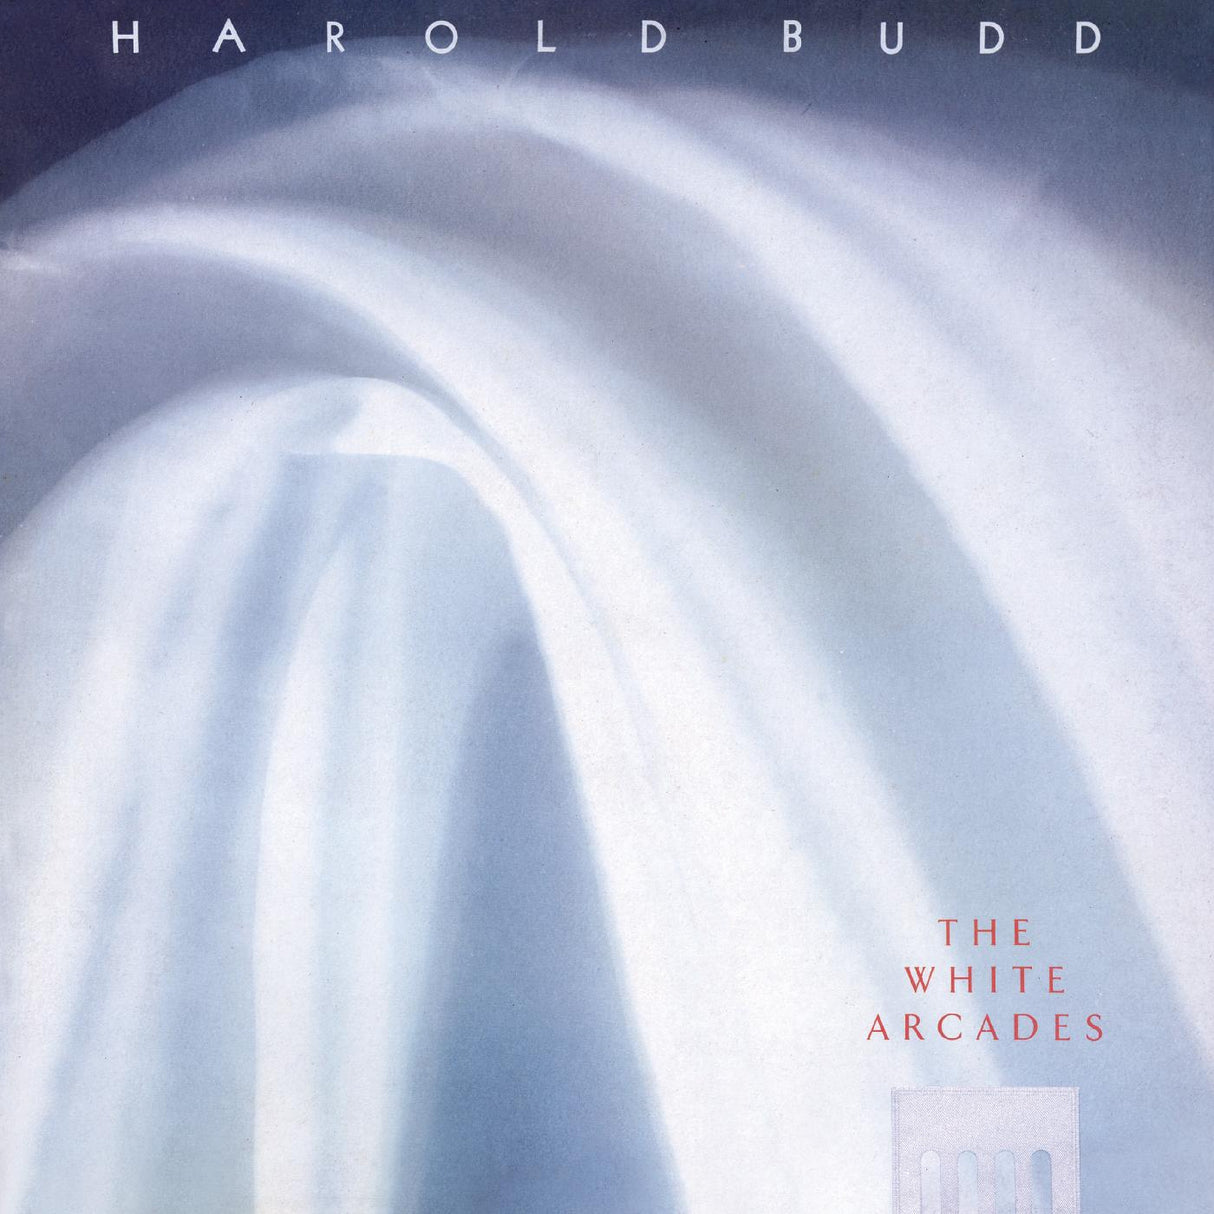 Harold Budd - The White Arcades (CLEAR VINYL) [Vinyl]